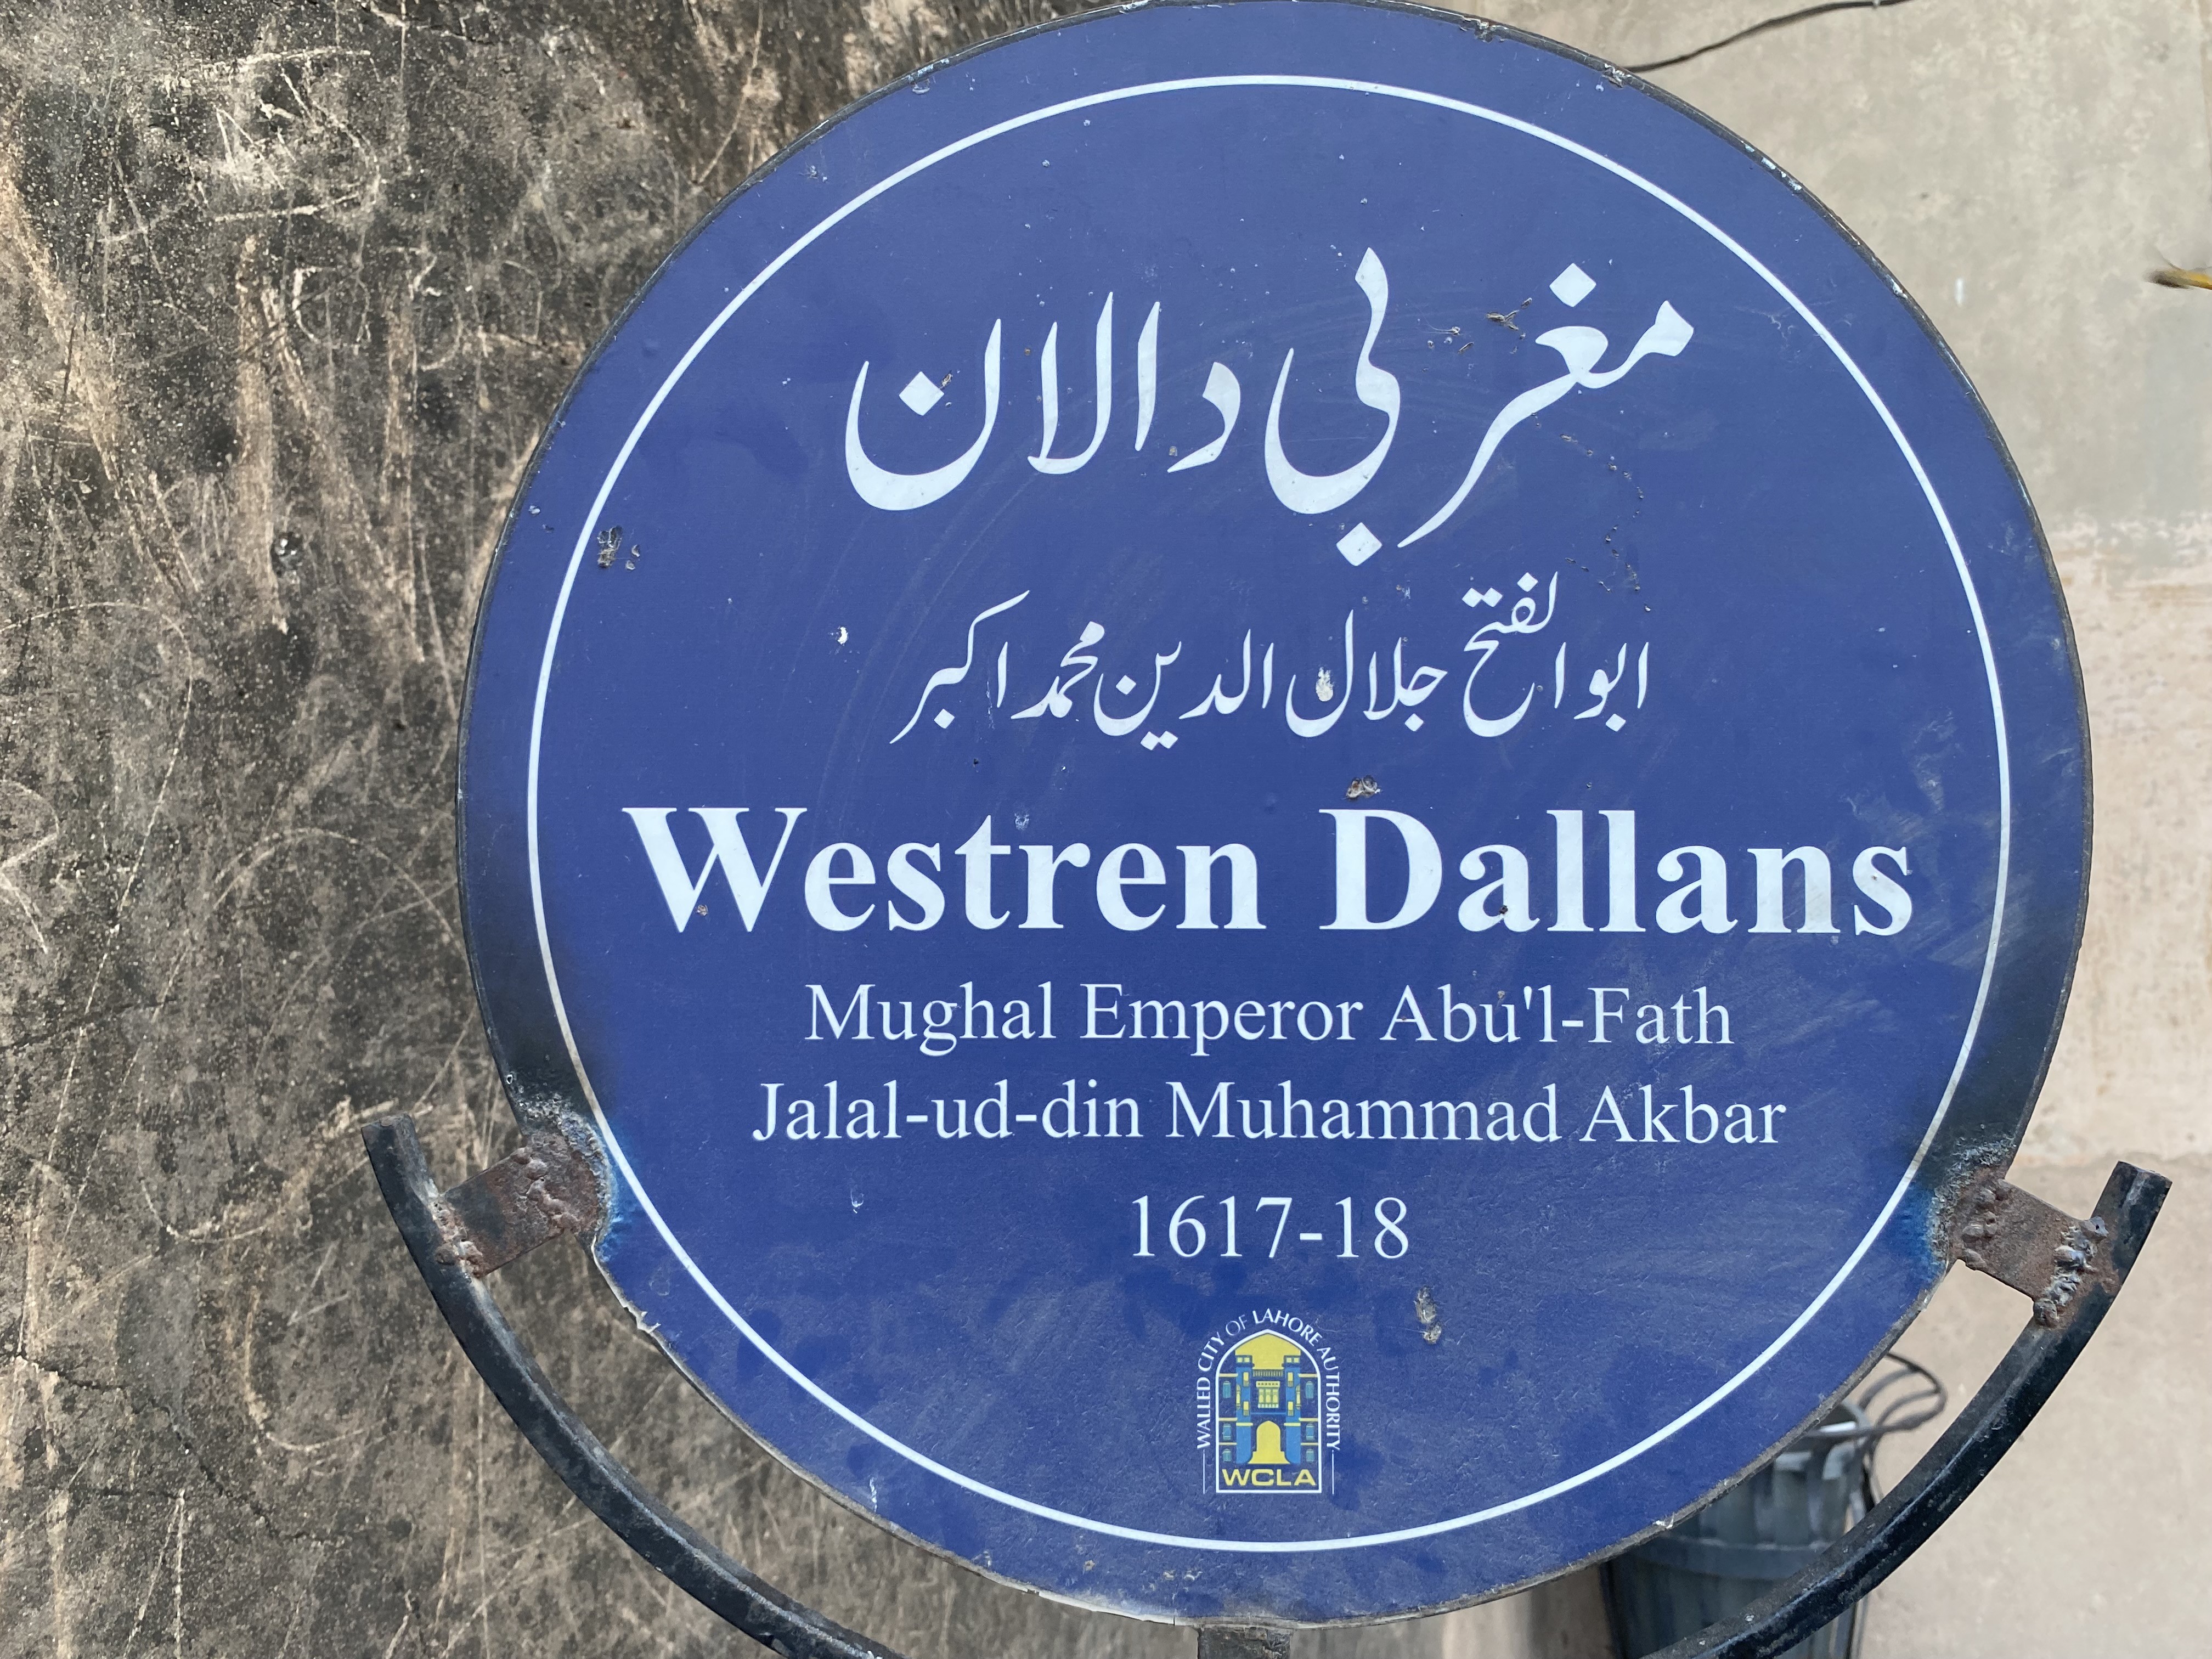 The board of Western Dallans